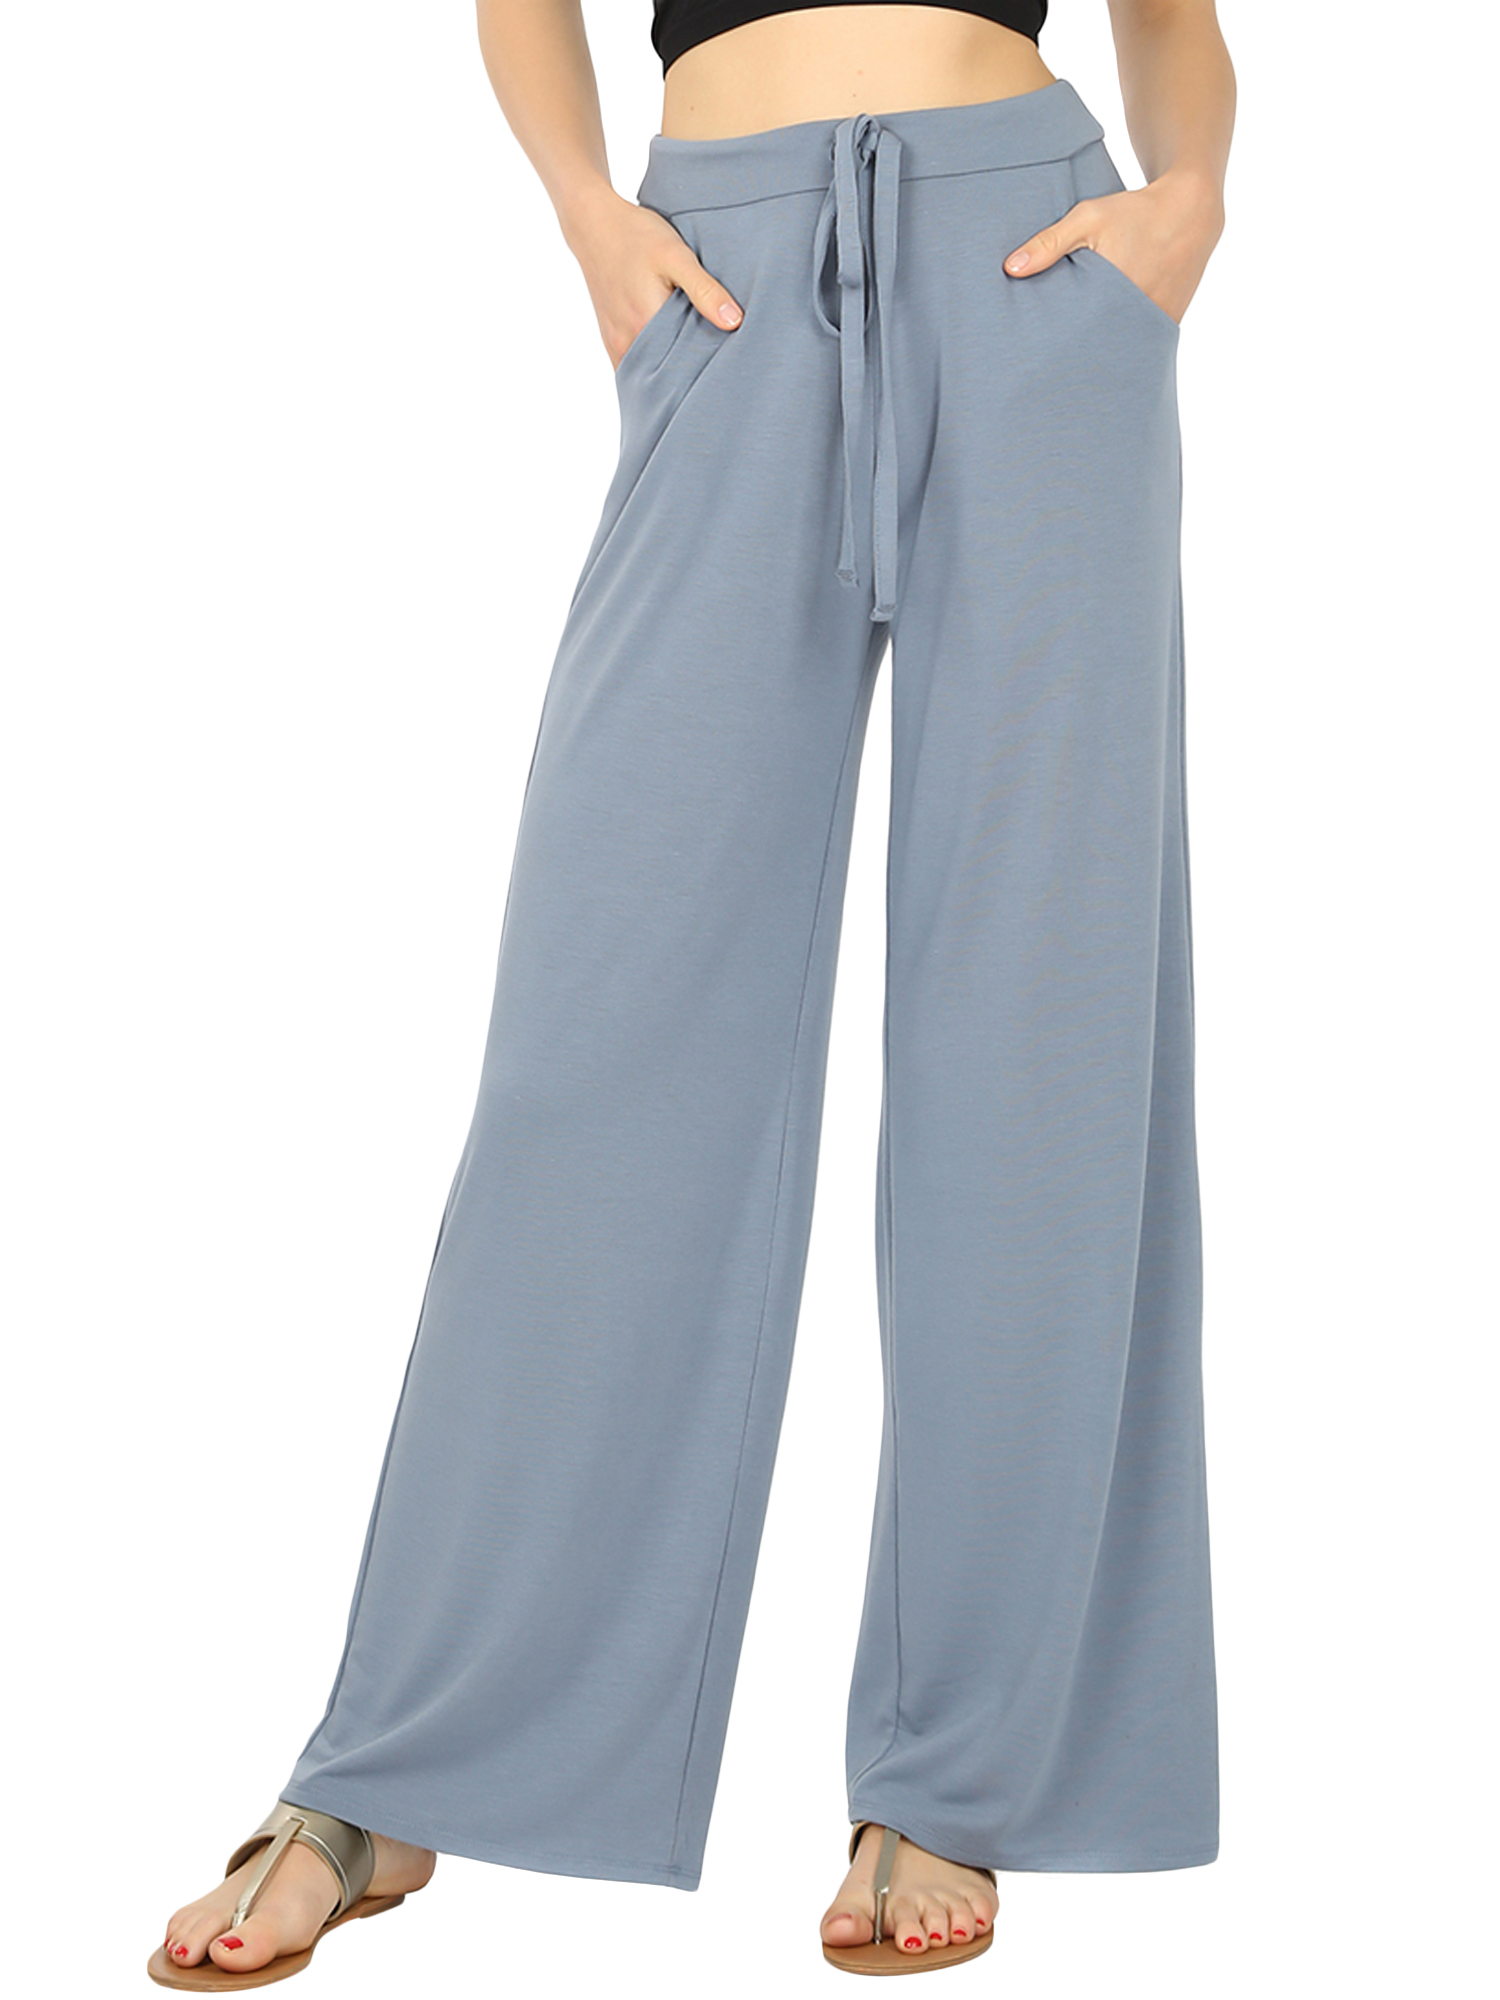 WiWi Womens Bamboo Lounge Pants Casual Wide Leg Pajama Pant Stretch Bottoms Plus Size Sleepwear S-4X